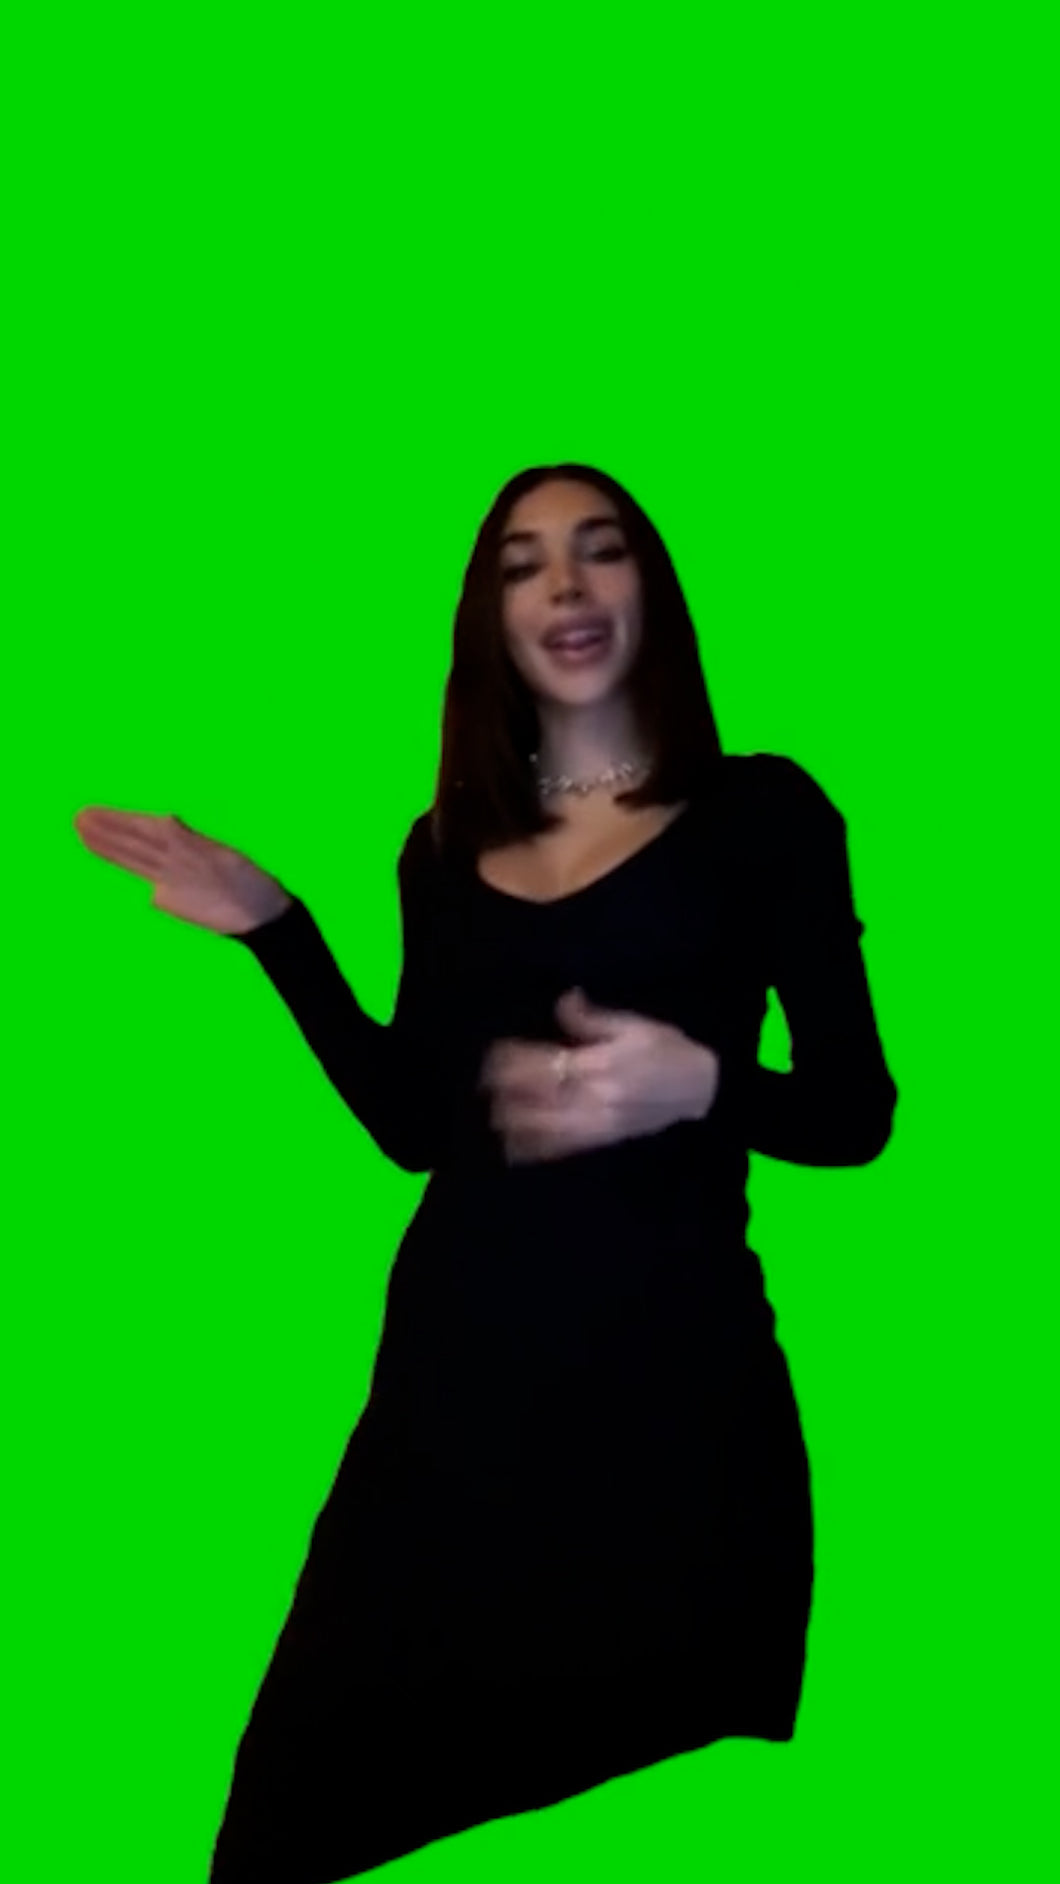 Chantel Jeffries TikTok Dance (Green Screen)